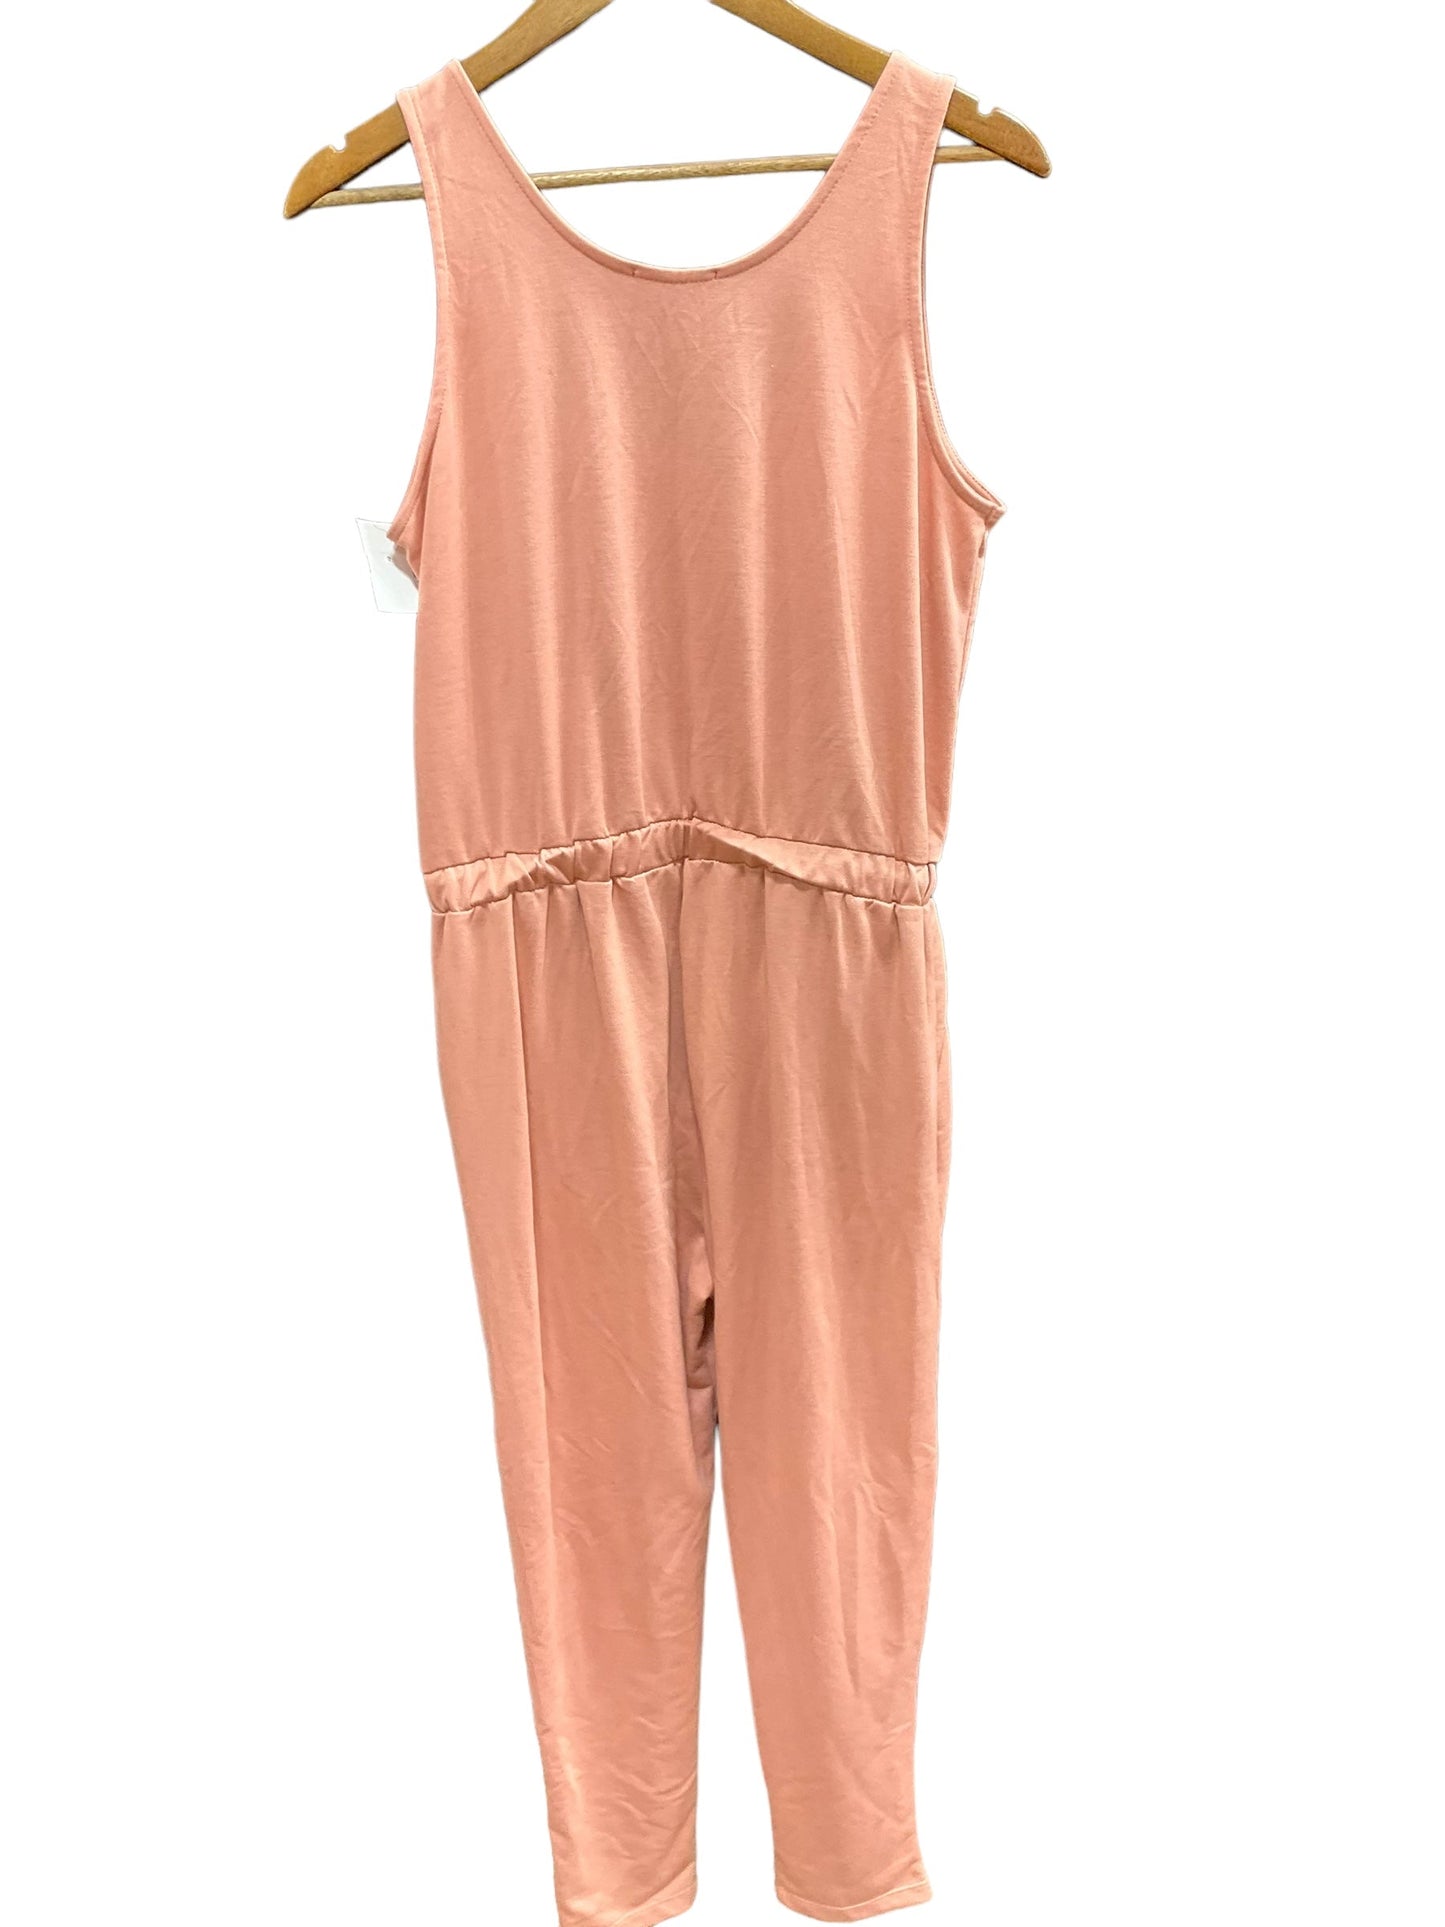 Pink Jumpsuit Ambiance Apparel, Size M